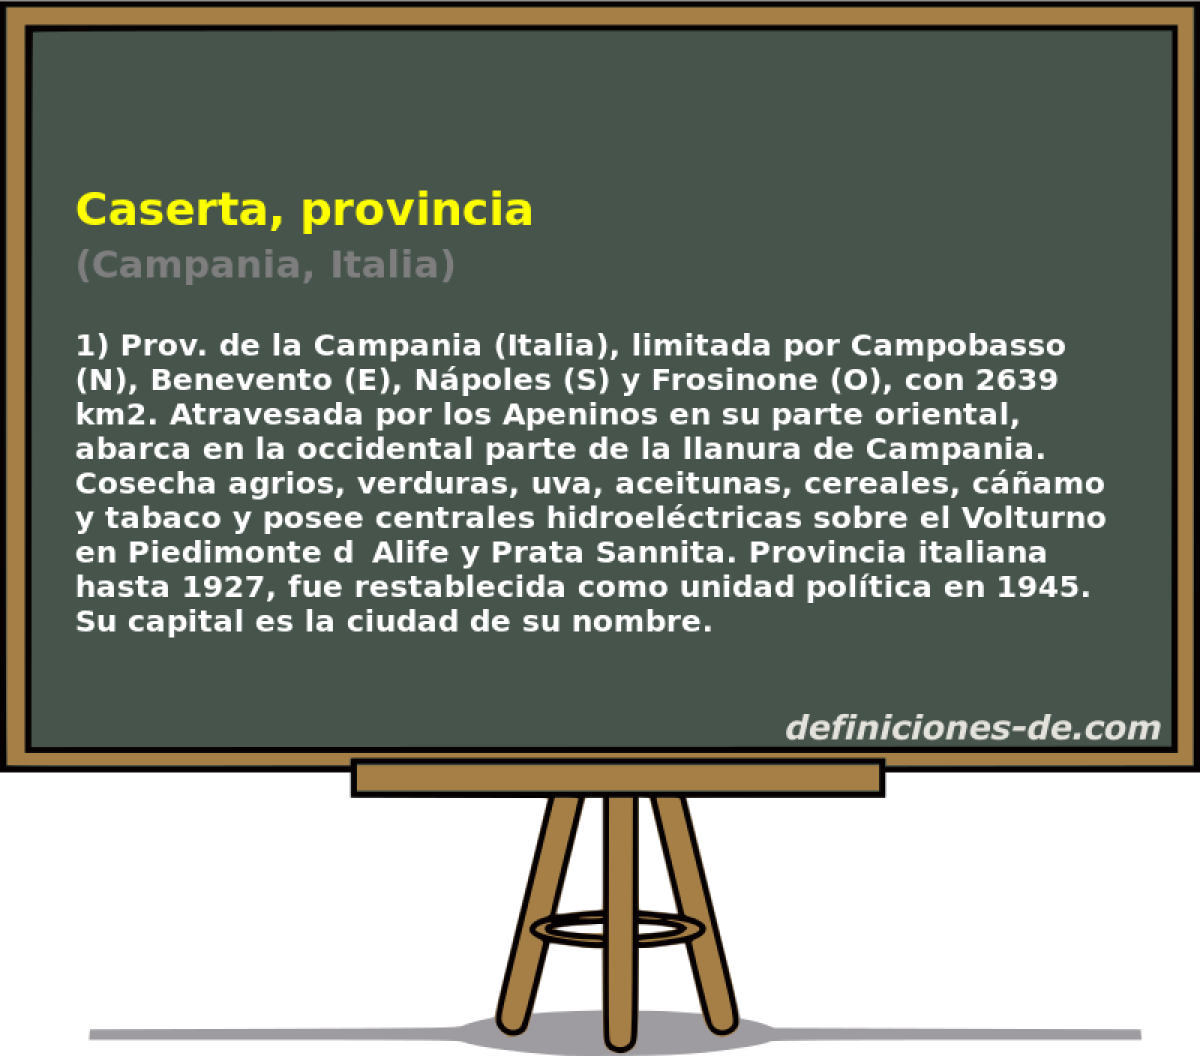 Caserta, provincia (Campania, Italia)